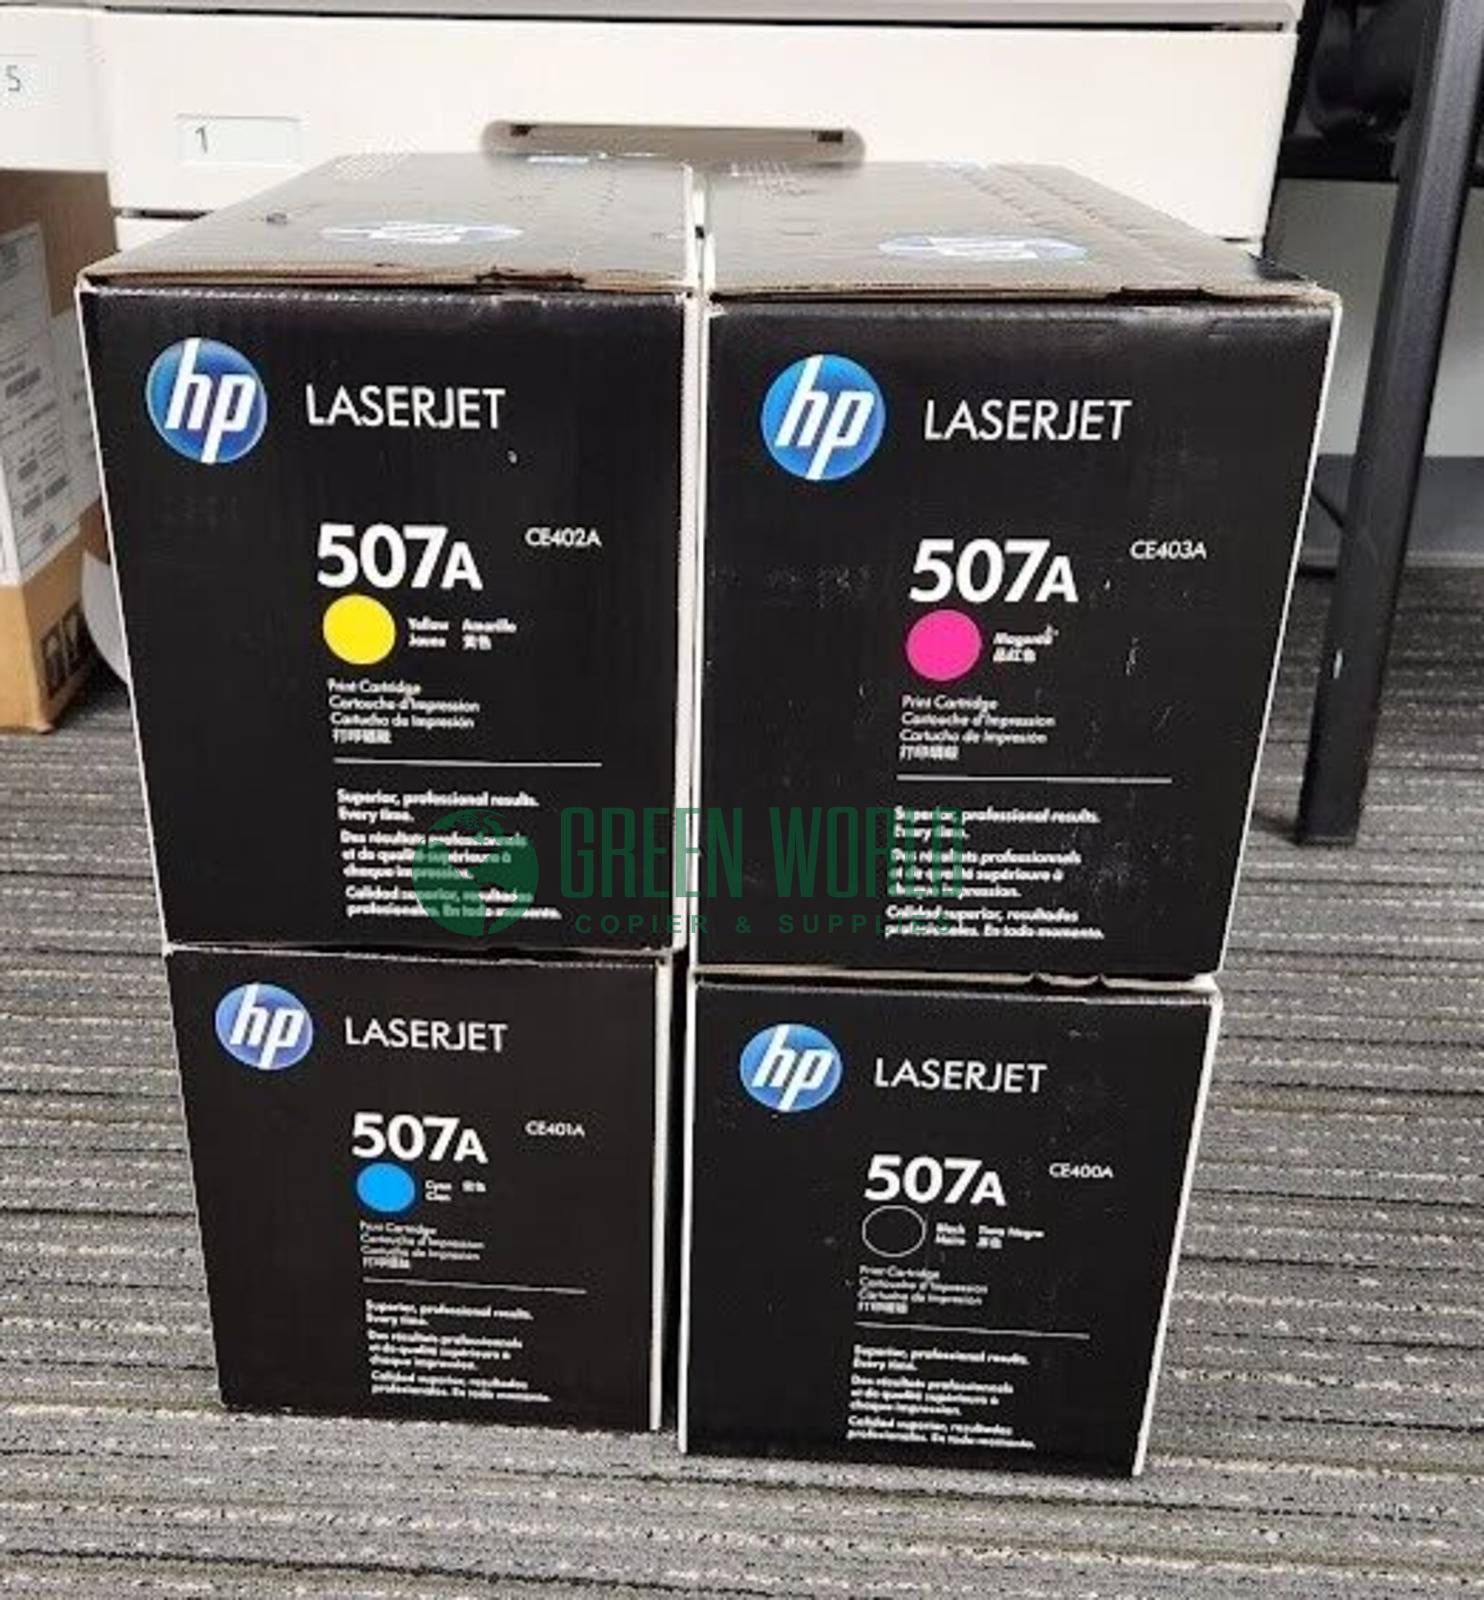 HP 507A CE401A CE402A CE403A CE400A Toner Cartridge LaserJet Enterprise 551